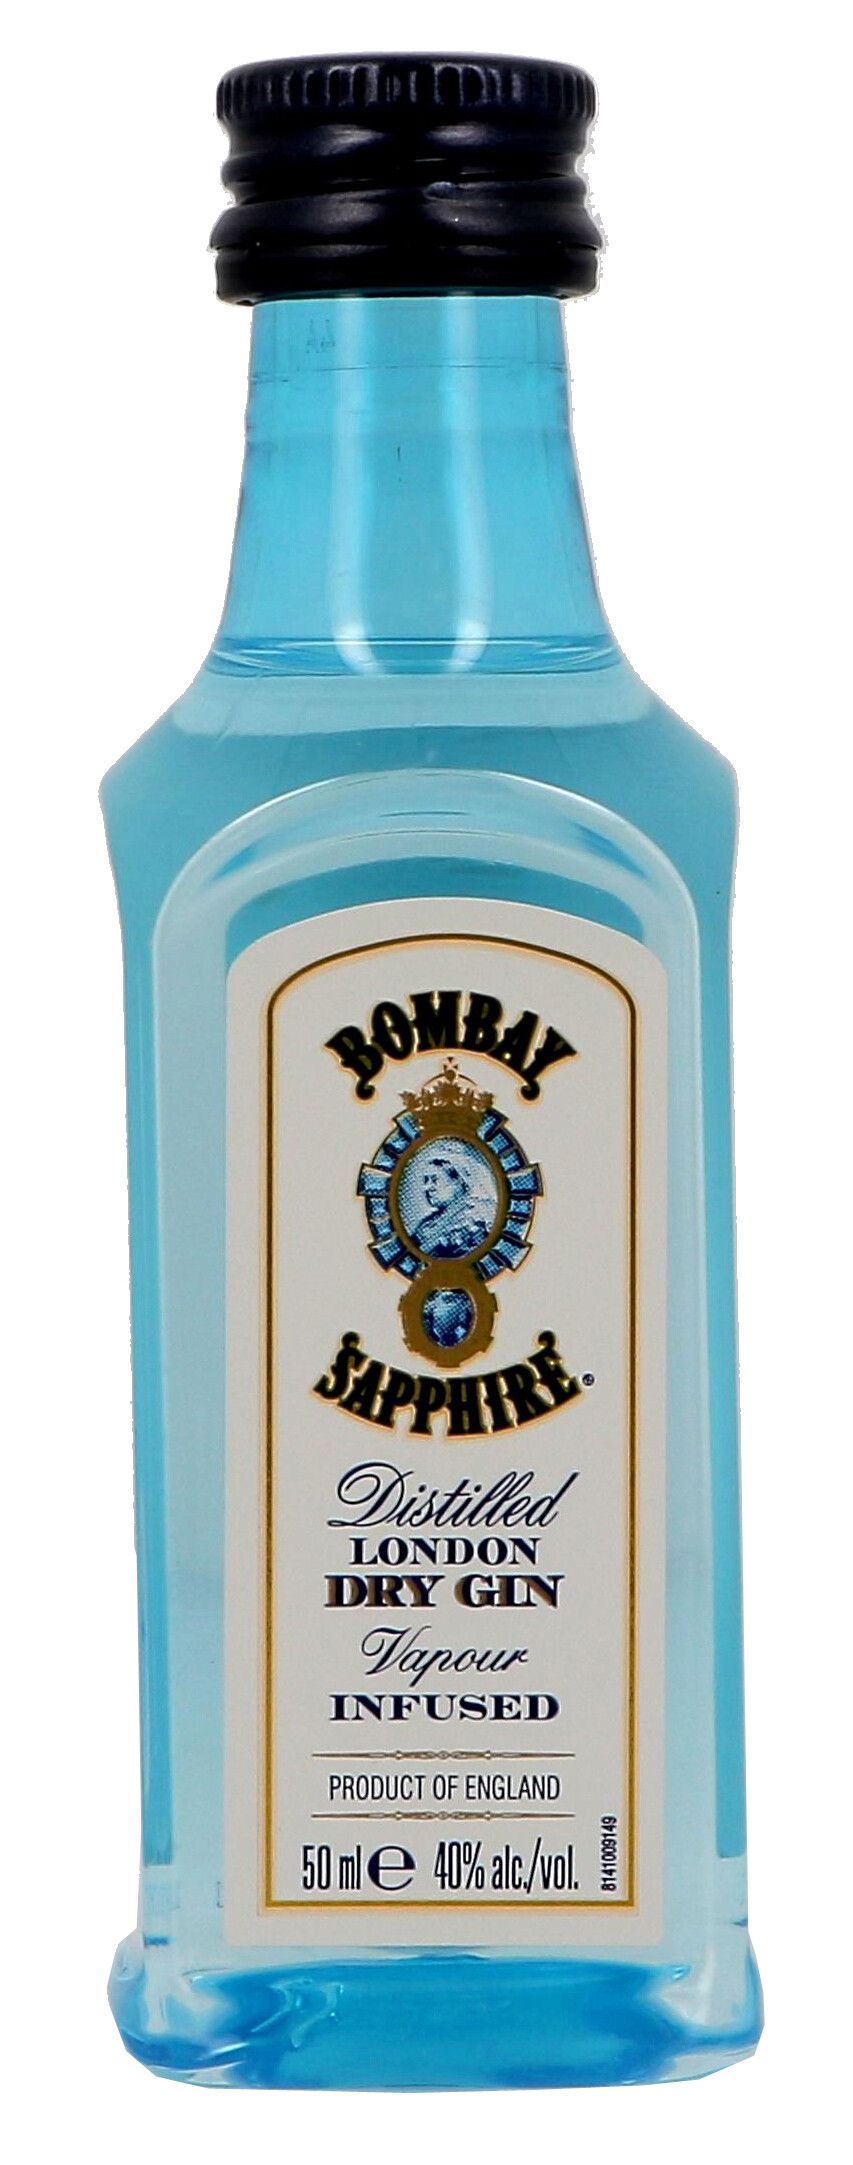 Miniature Gin Bombay Sapphire 5cl 40%